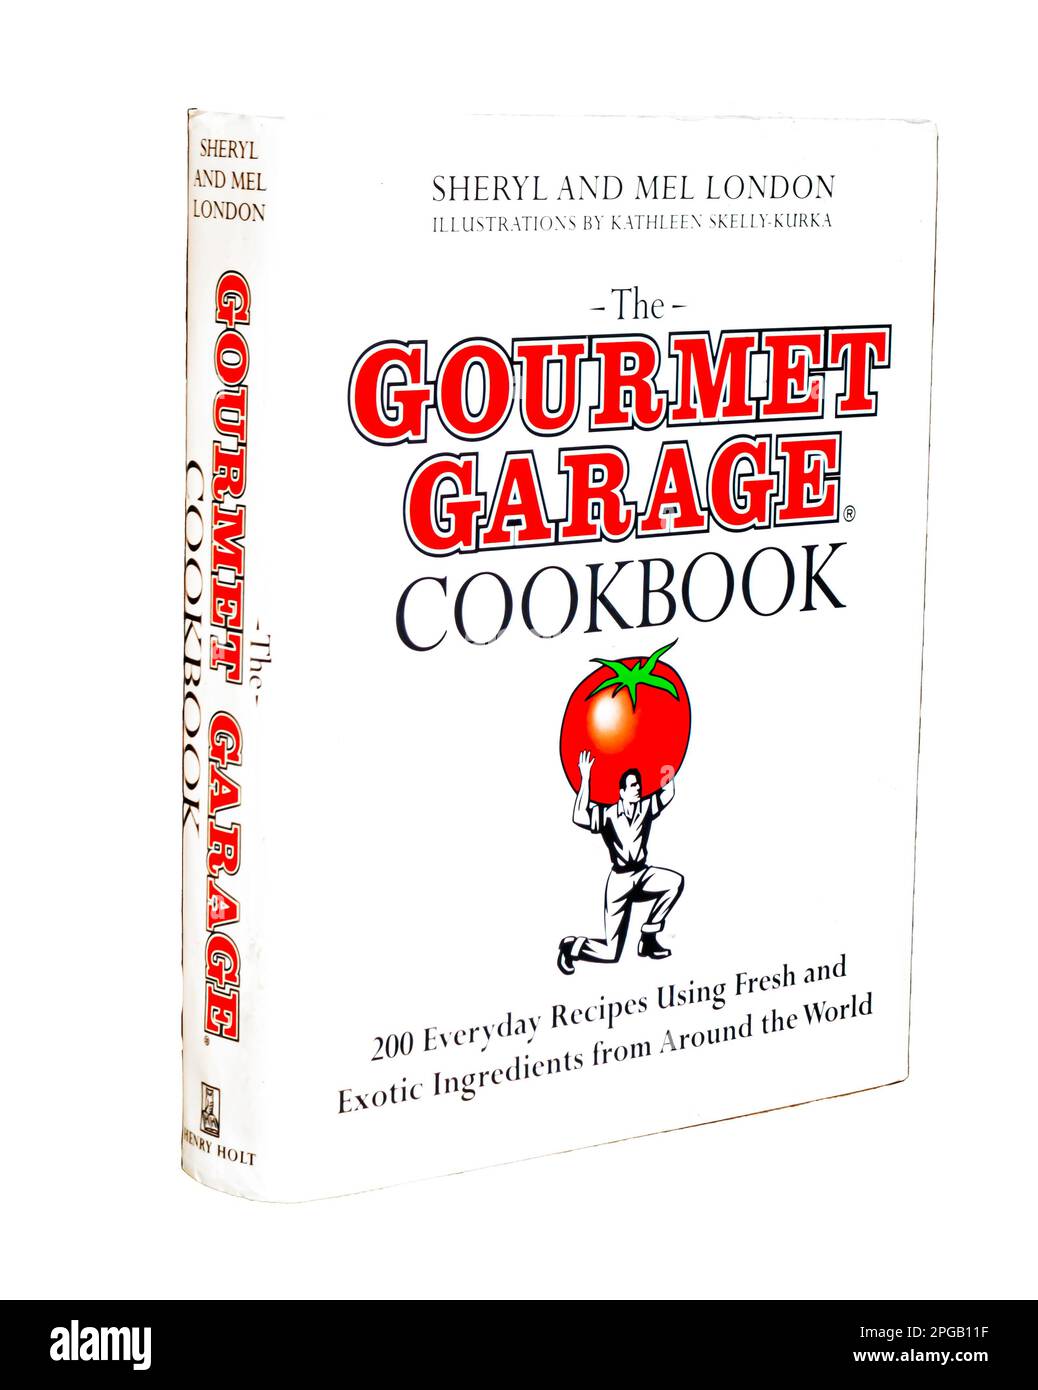 The Gourmet Garage Cookbook - Libro di Mel London e Sheryl London Foto Stock